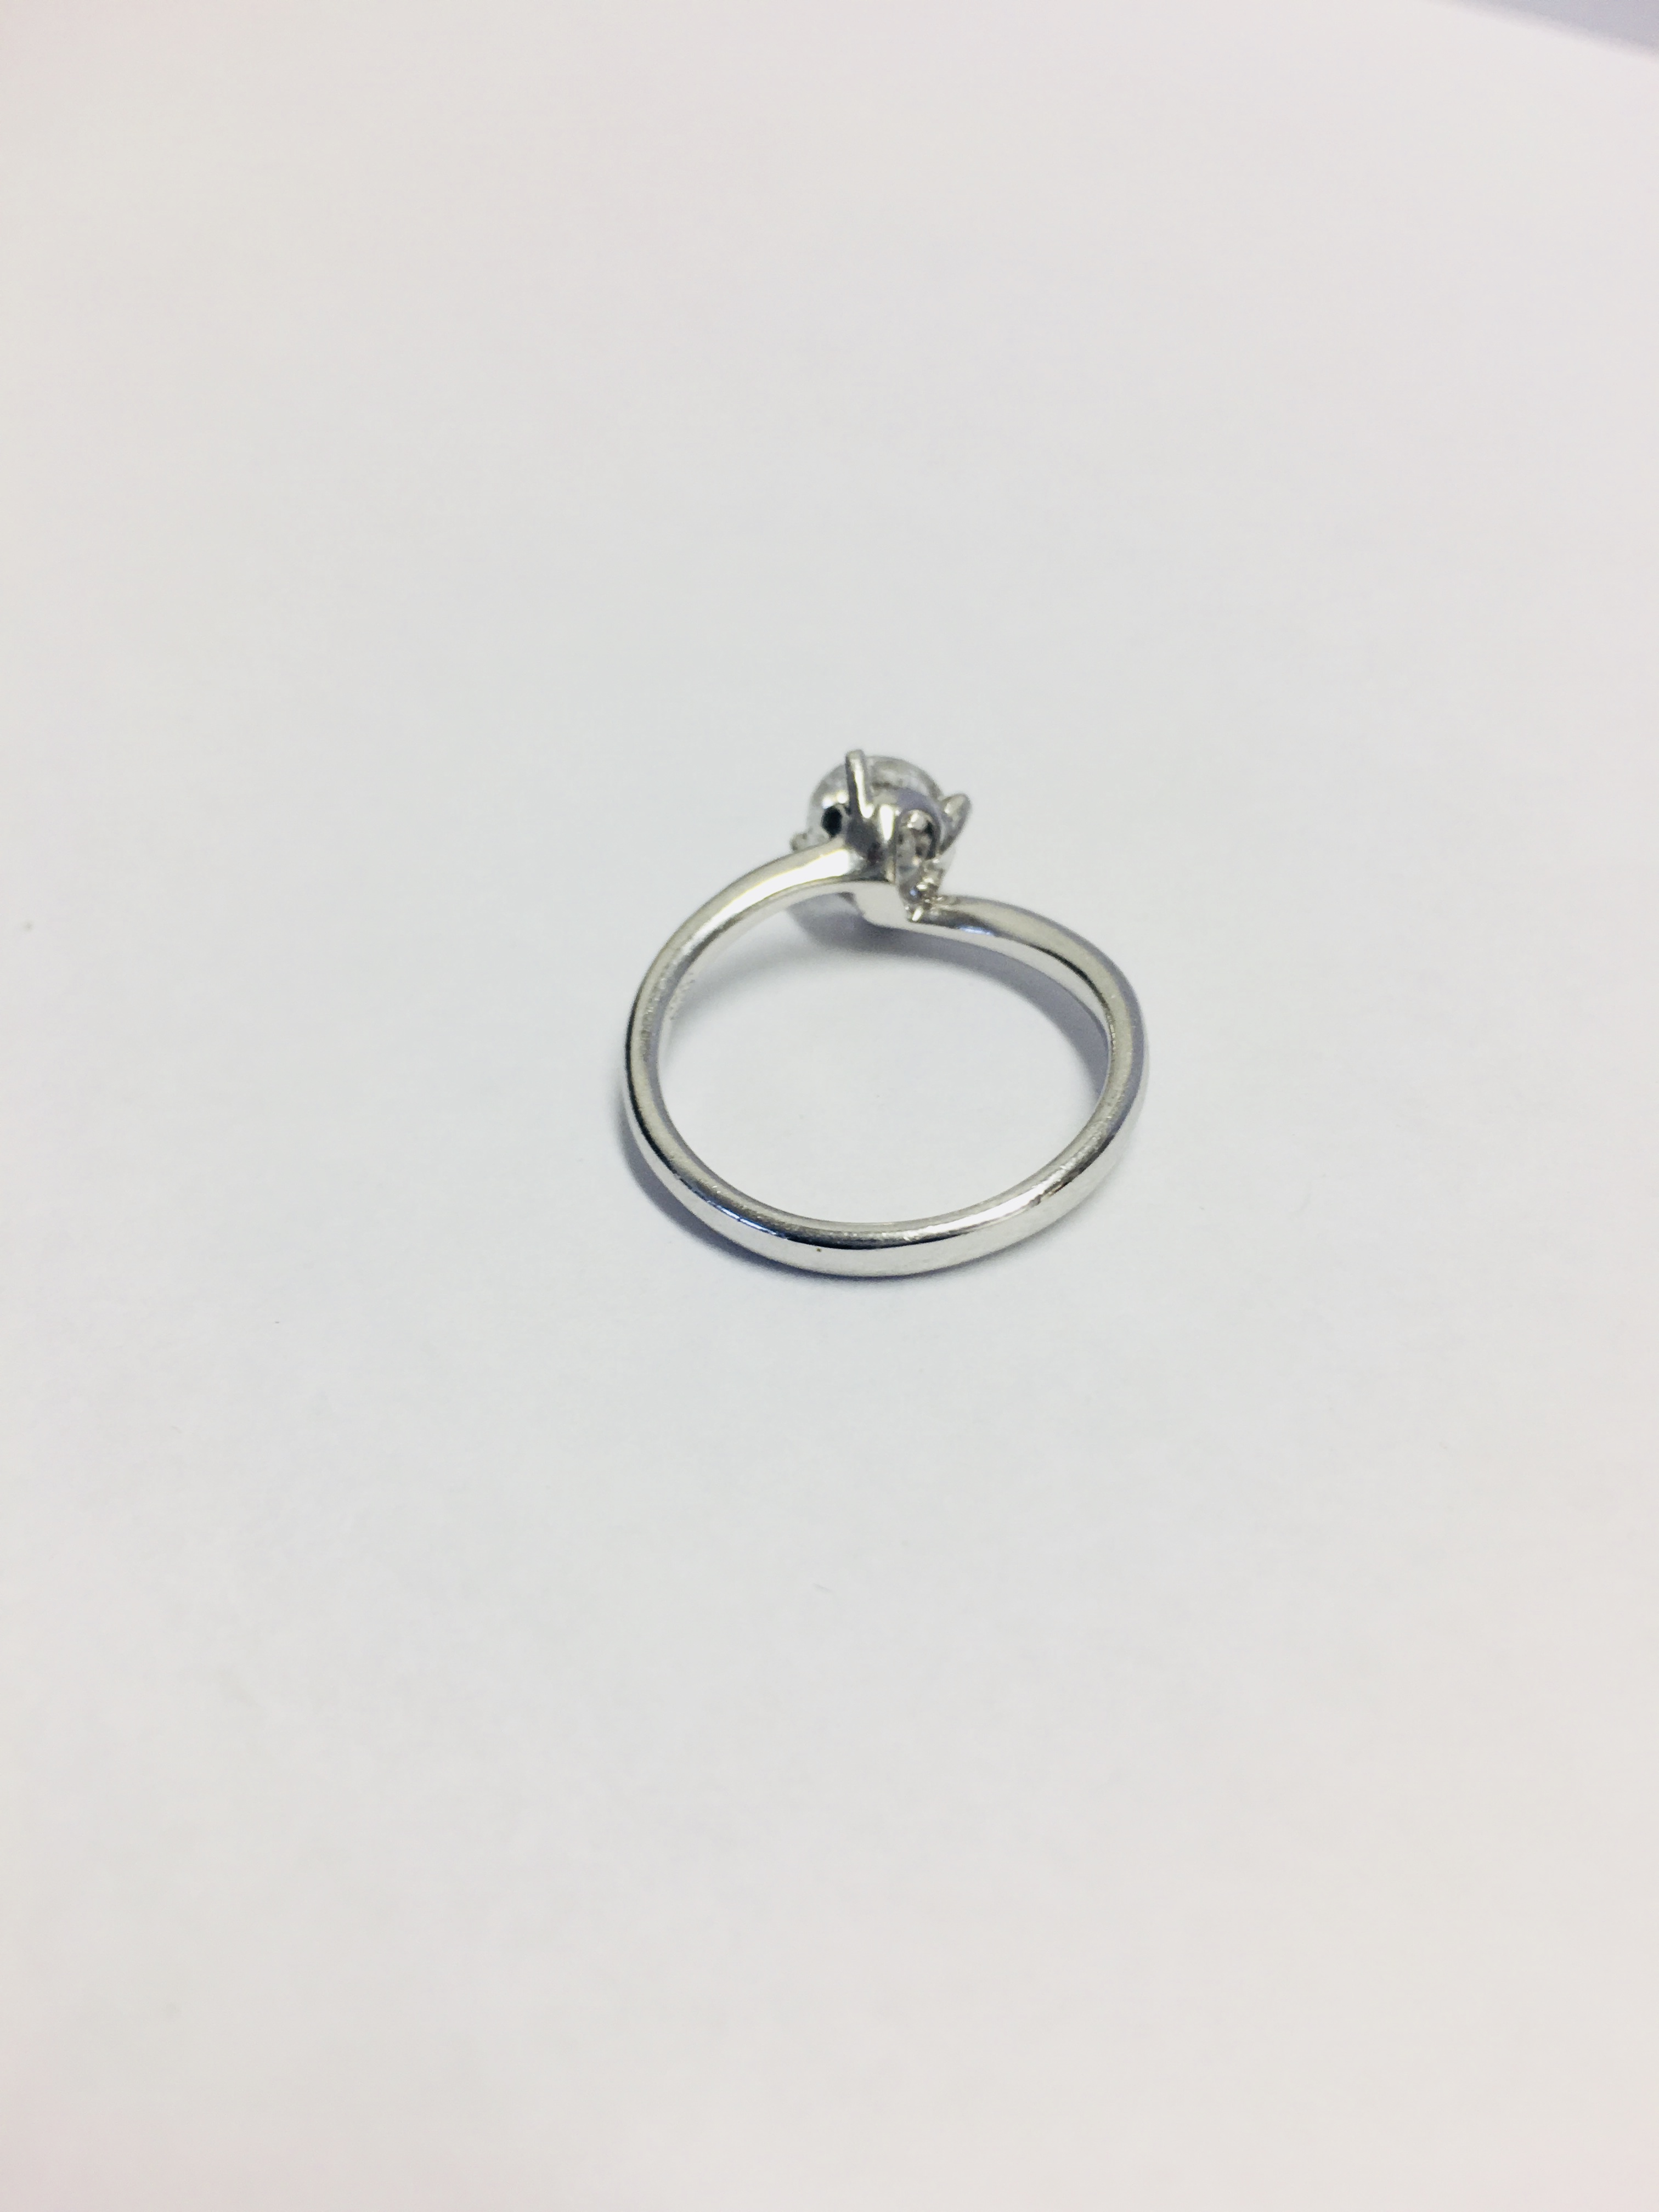 1Ct Brilliant Cut Diamond Solitaire Ring, - Image 4 of 6